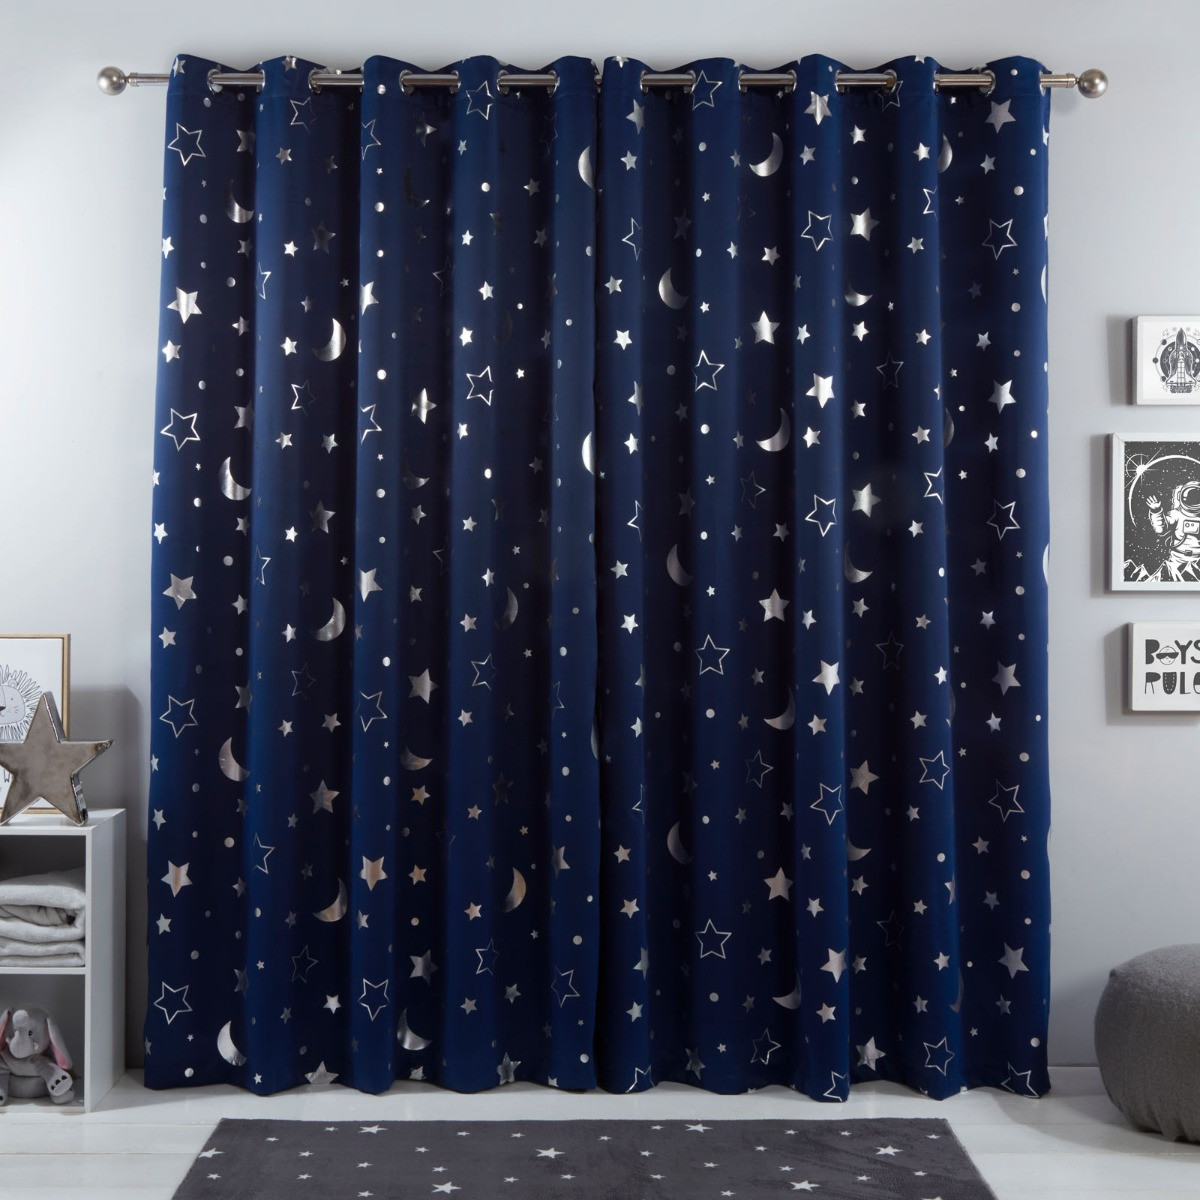 Dreamscene Star Galaxy Blackout Curtains Grommet Top - Navy Blue>